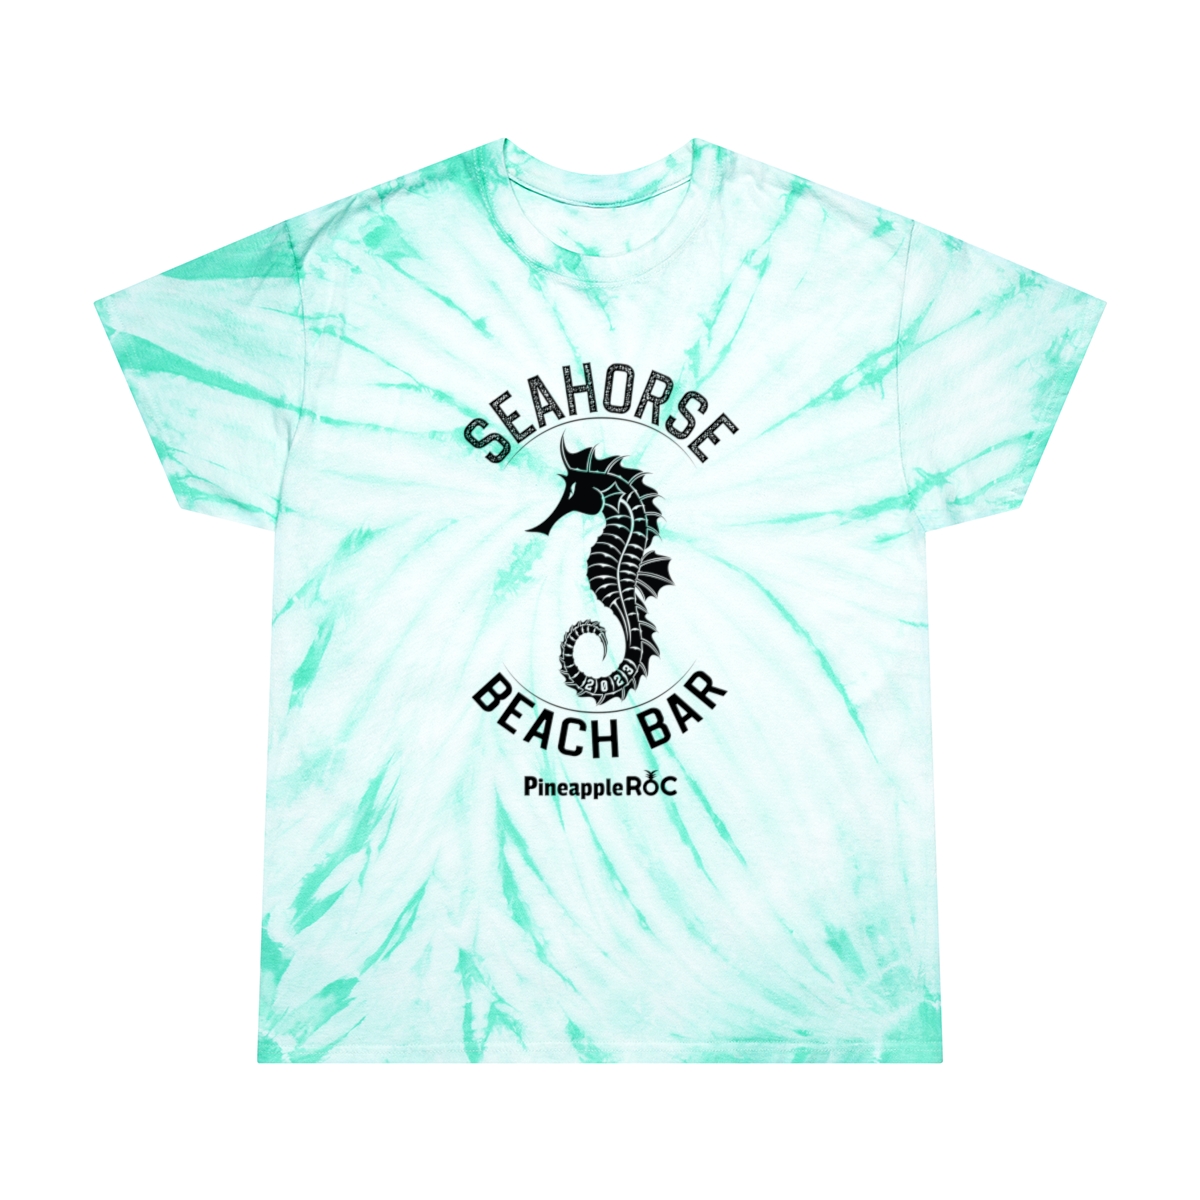 Seahorse Beach Bar product thumbnail image